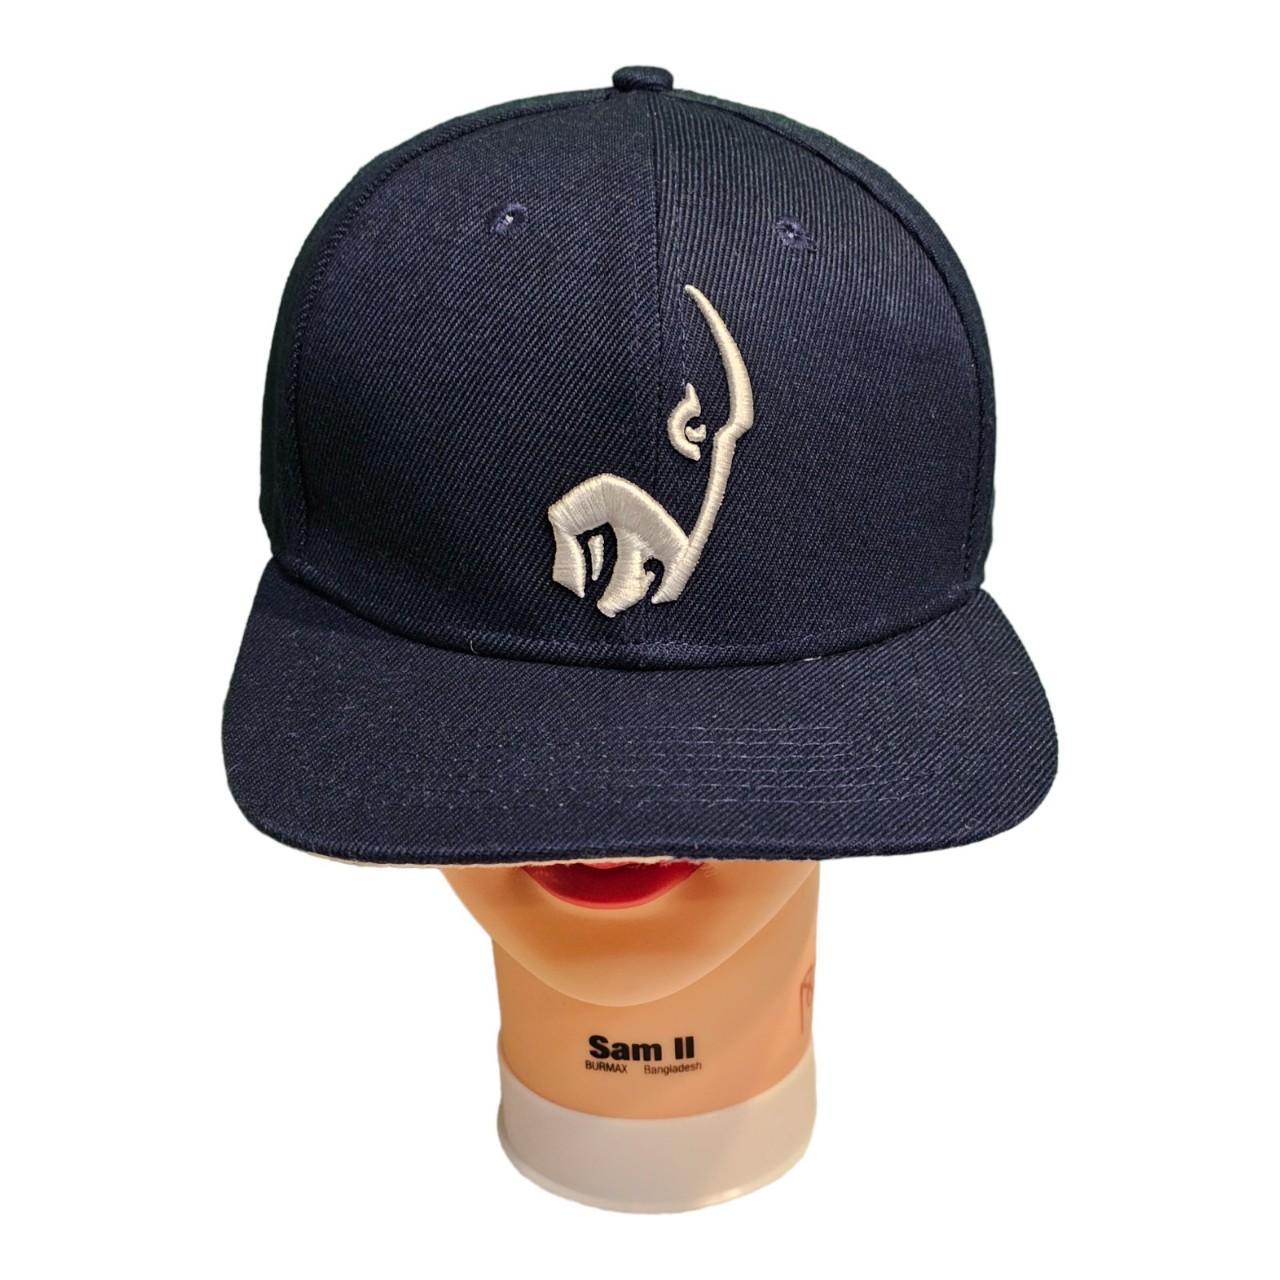 Los Angeles/ St Louis Rams New Era Fitted Hat #rams - Depop